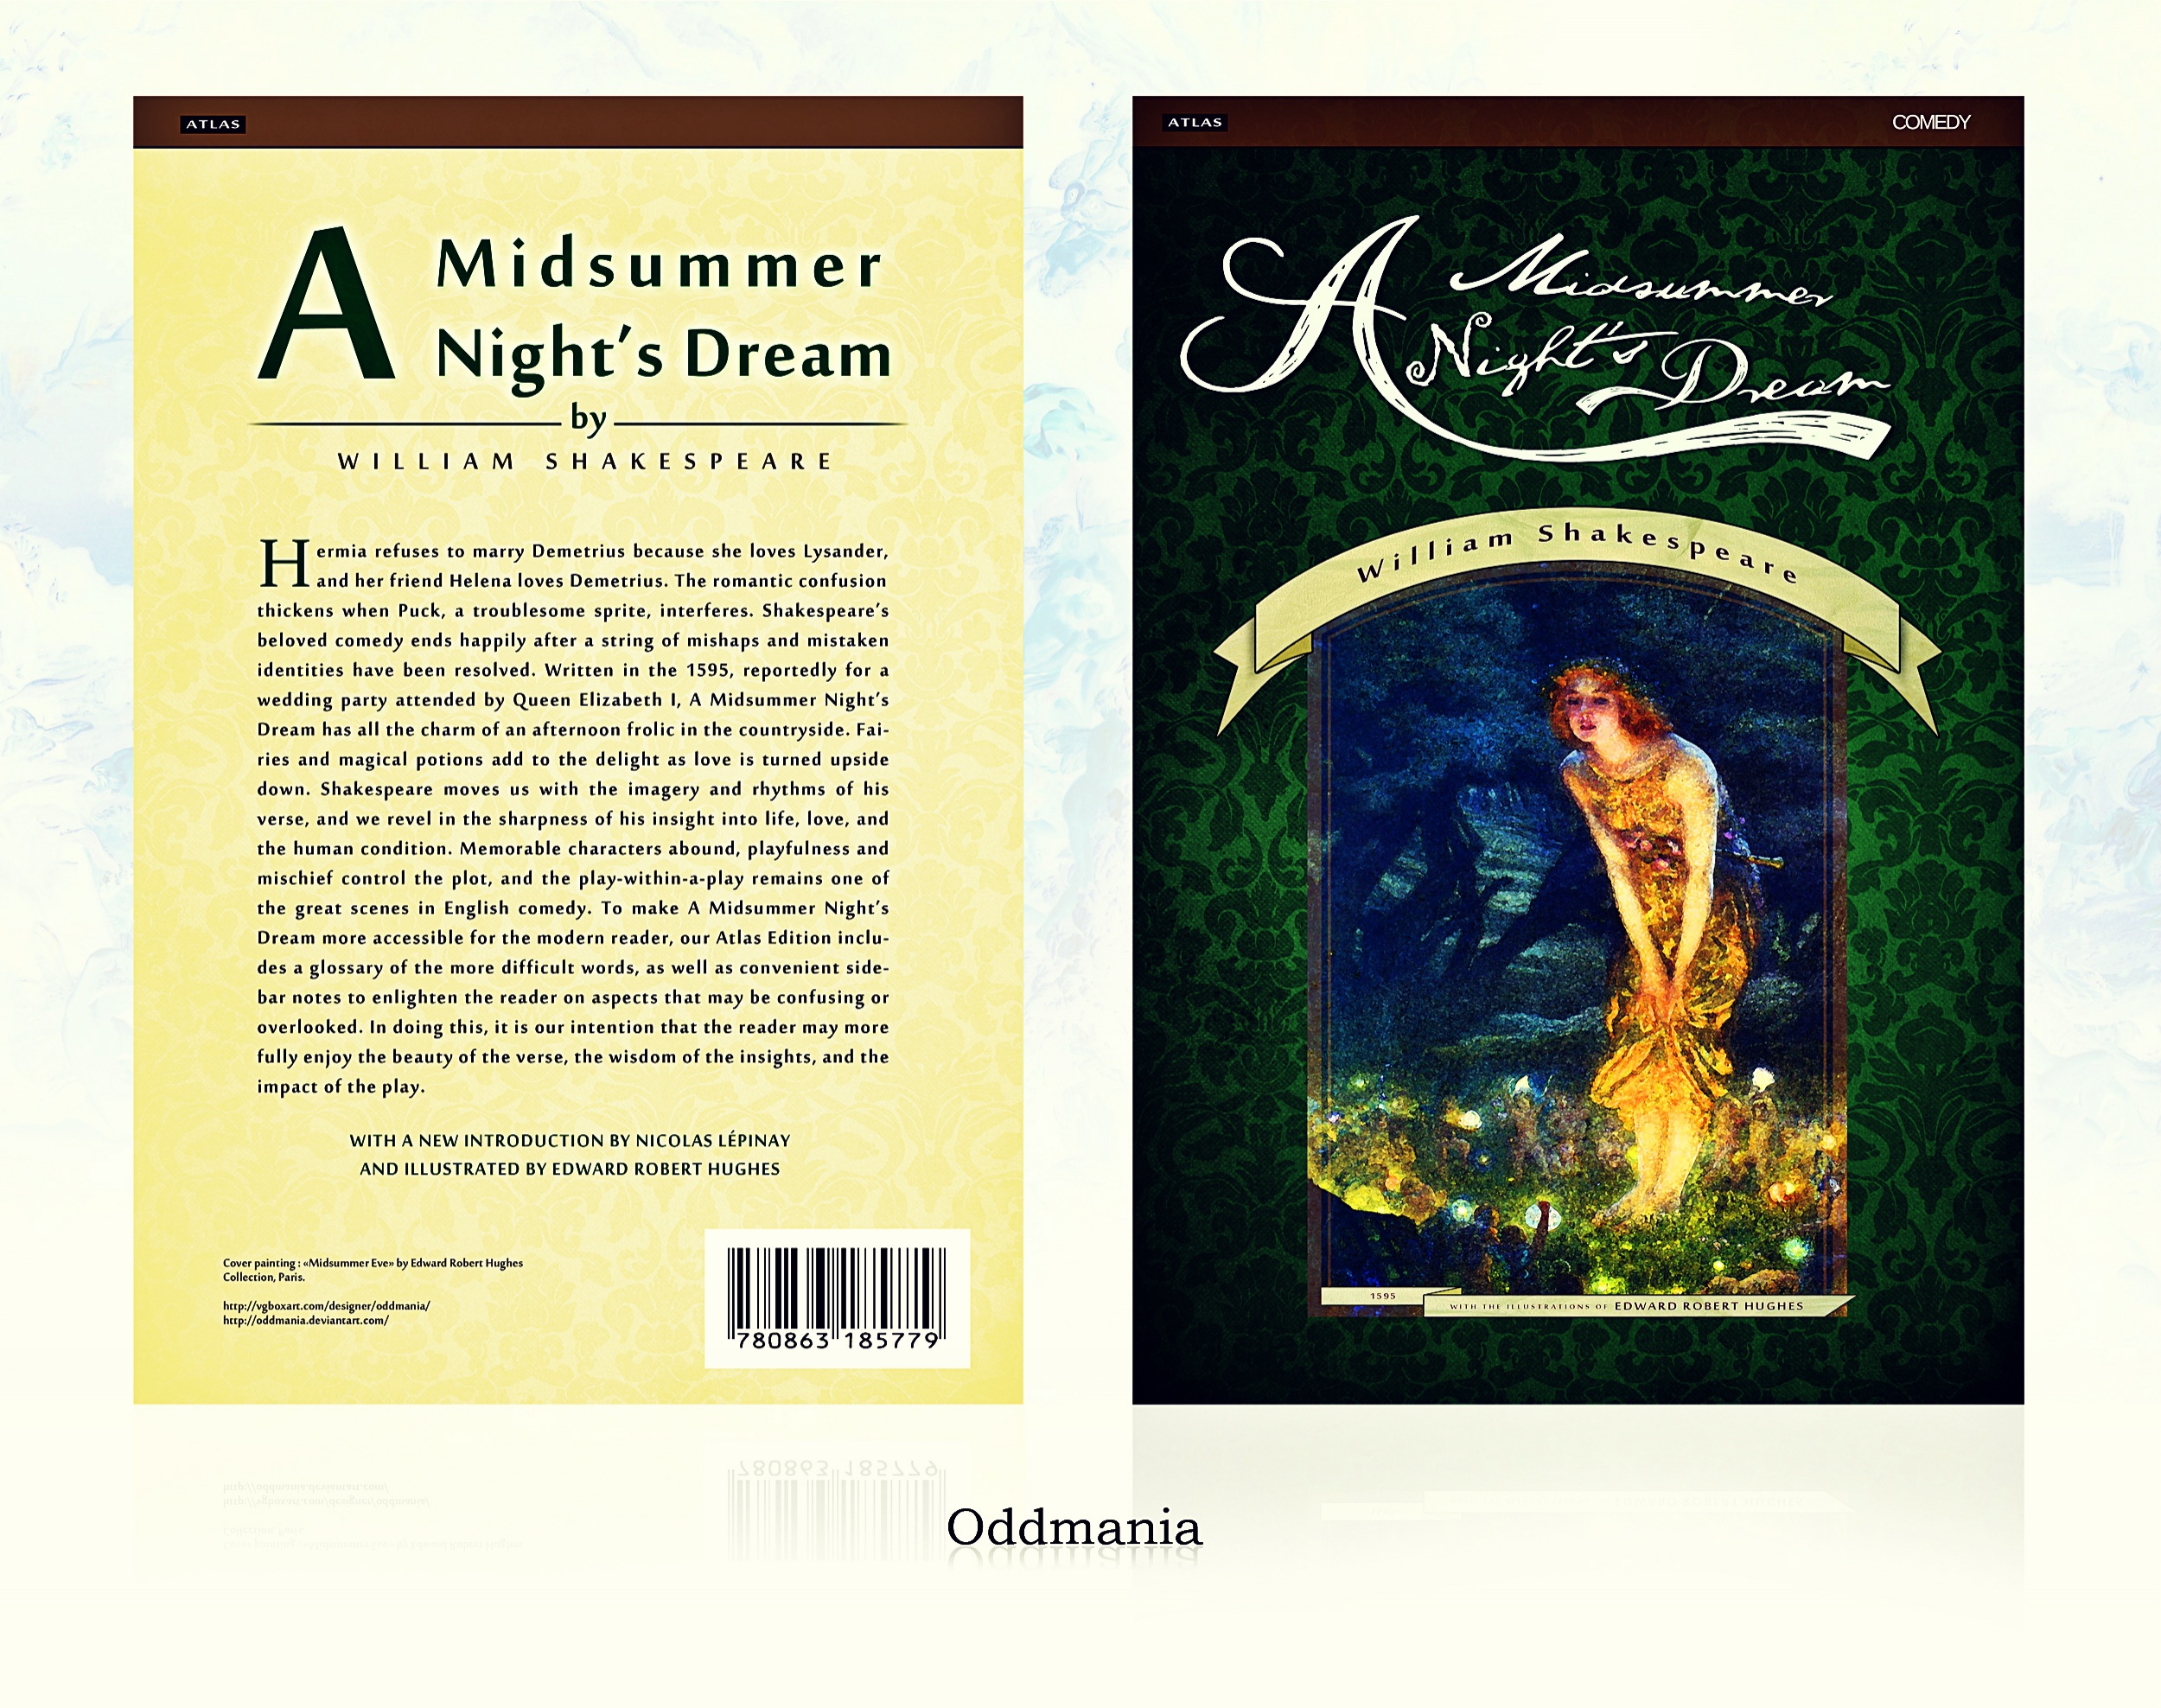 A Midsummer Night's Dream box cover